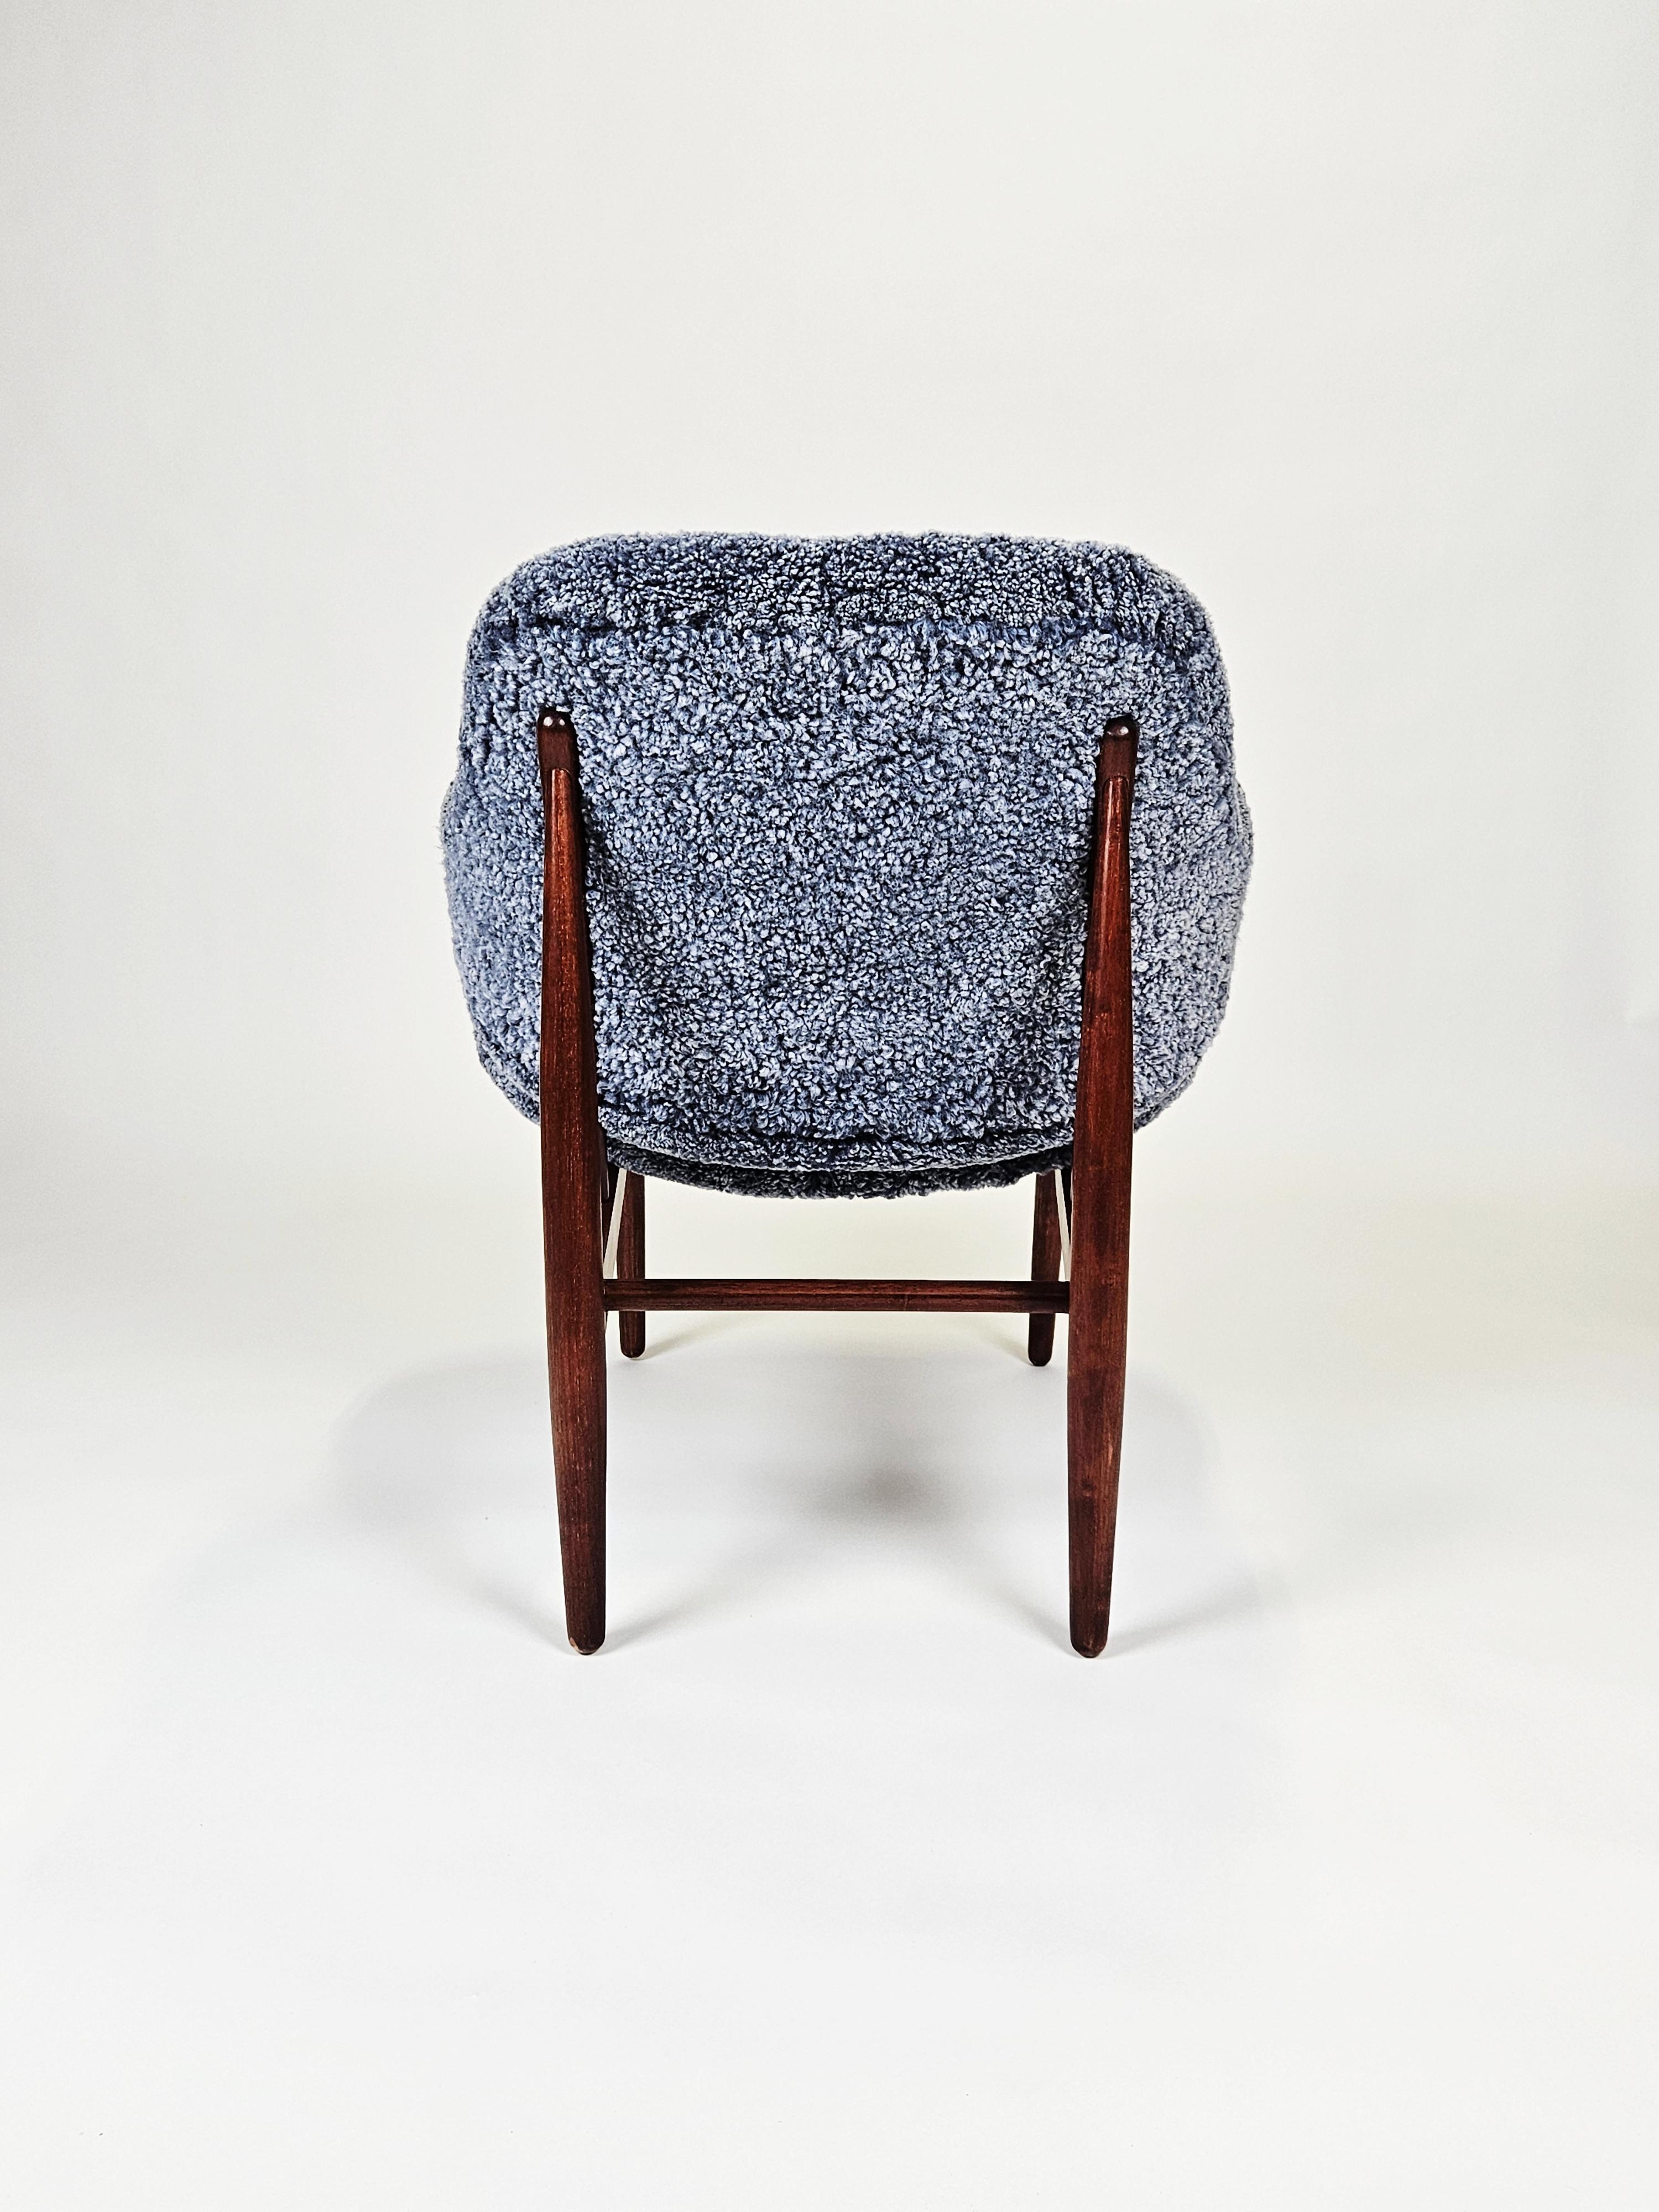 Sheepskin Rare Scandinavian Modern shell chair by IB Kofod Larsen, Denmark, 1950s For Sale